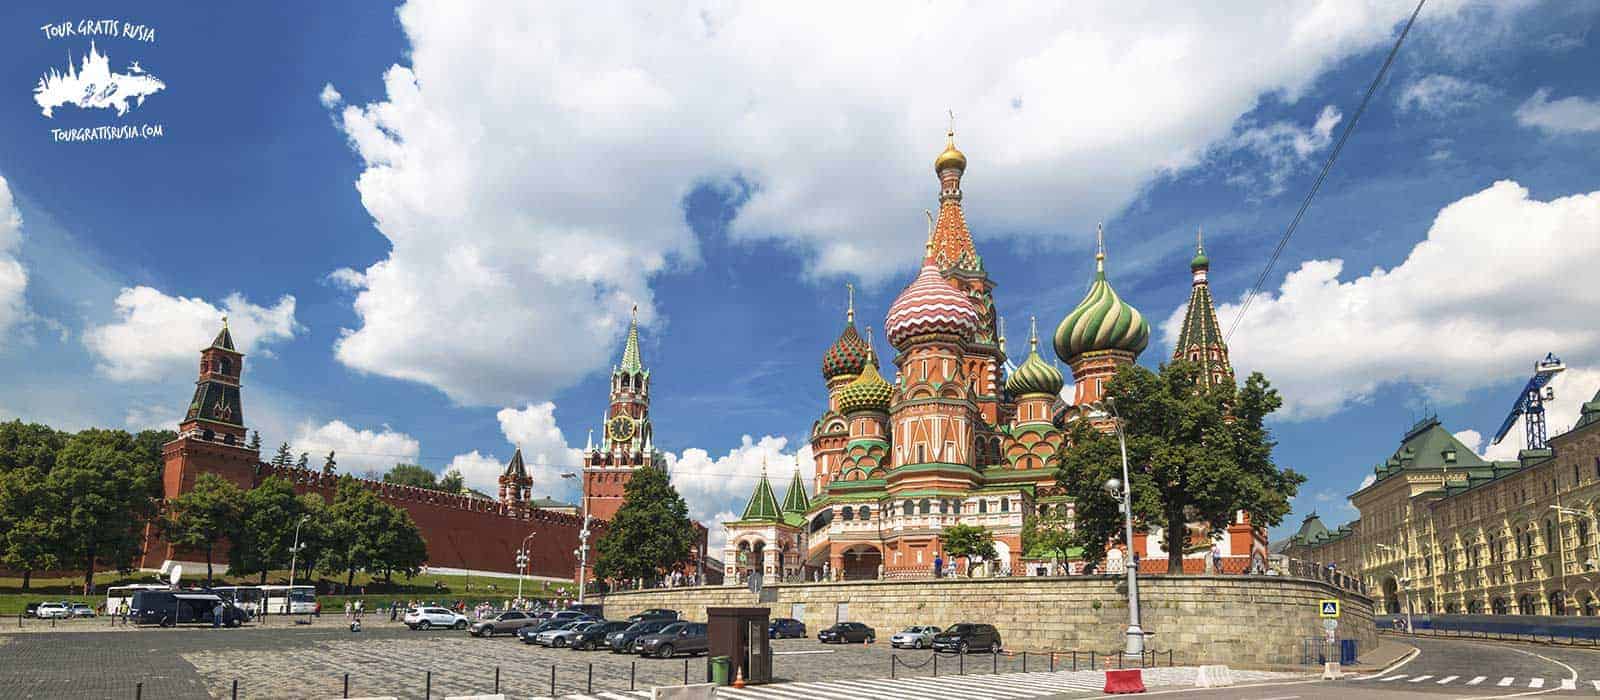 Tour completo en MoscÃº: centro – gratis, metro, Segunda Guerra y excursiÃ³n nocturna